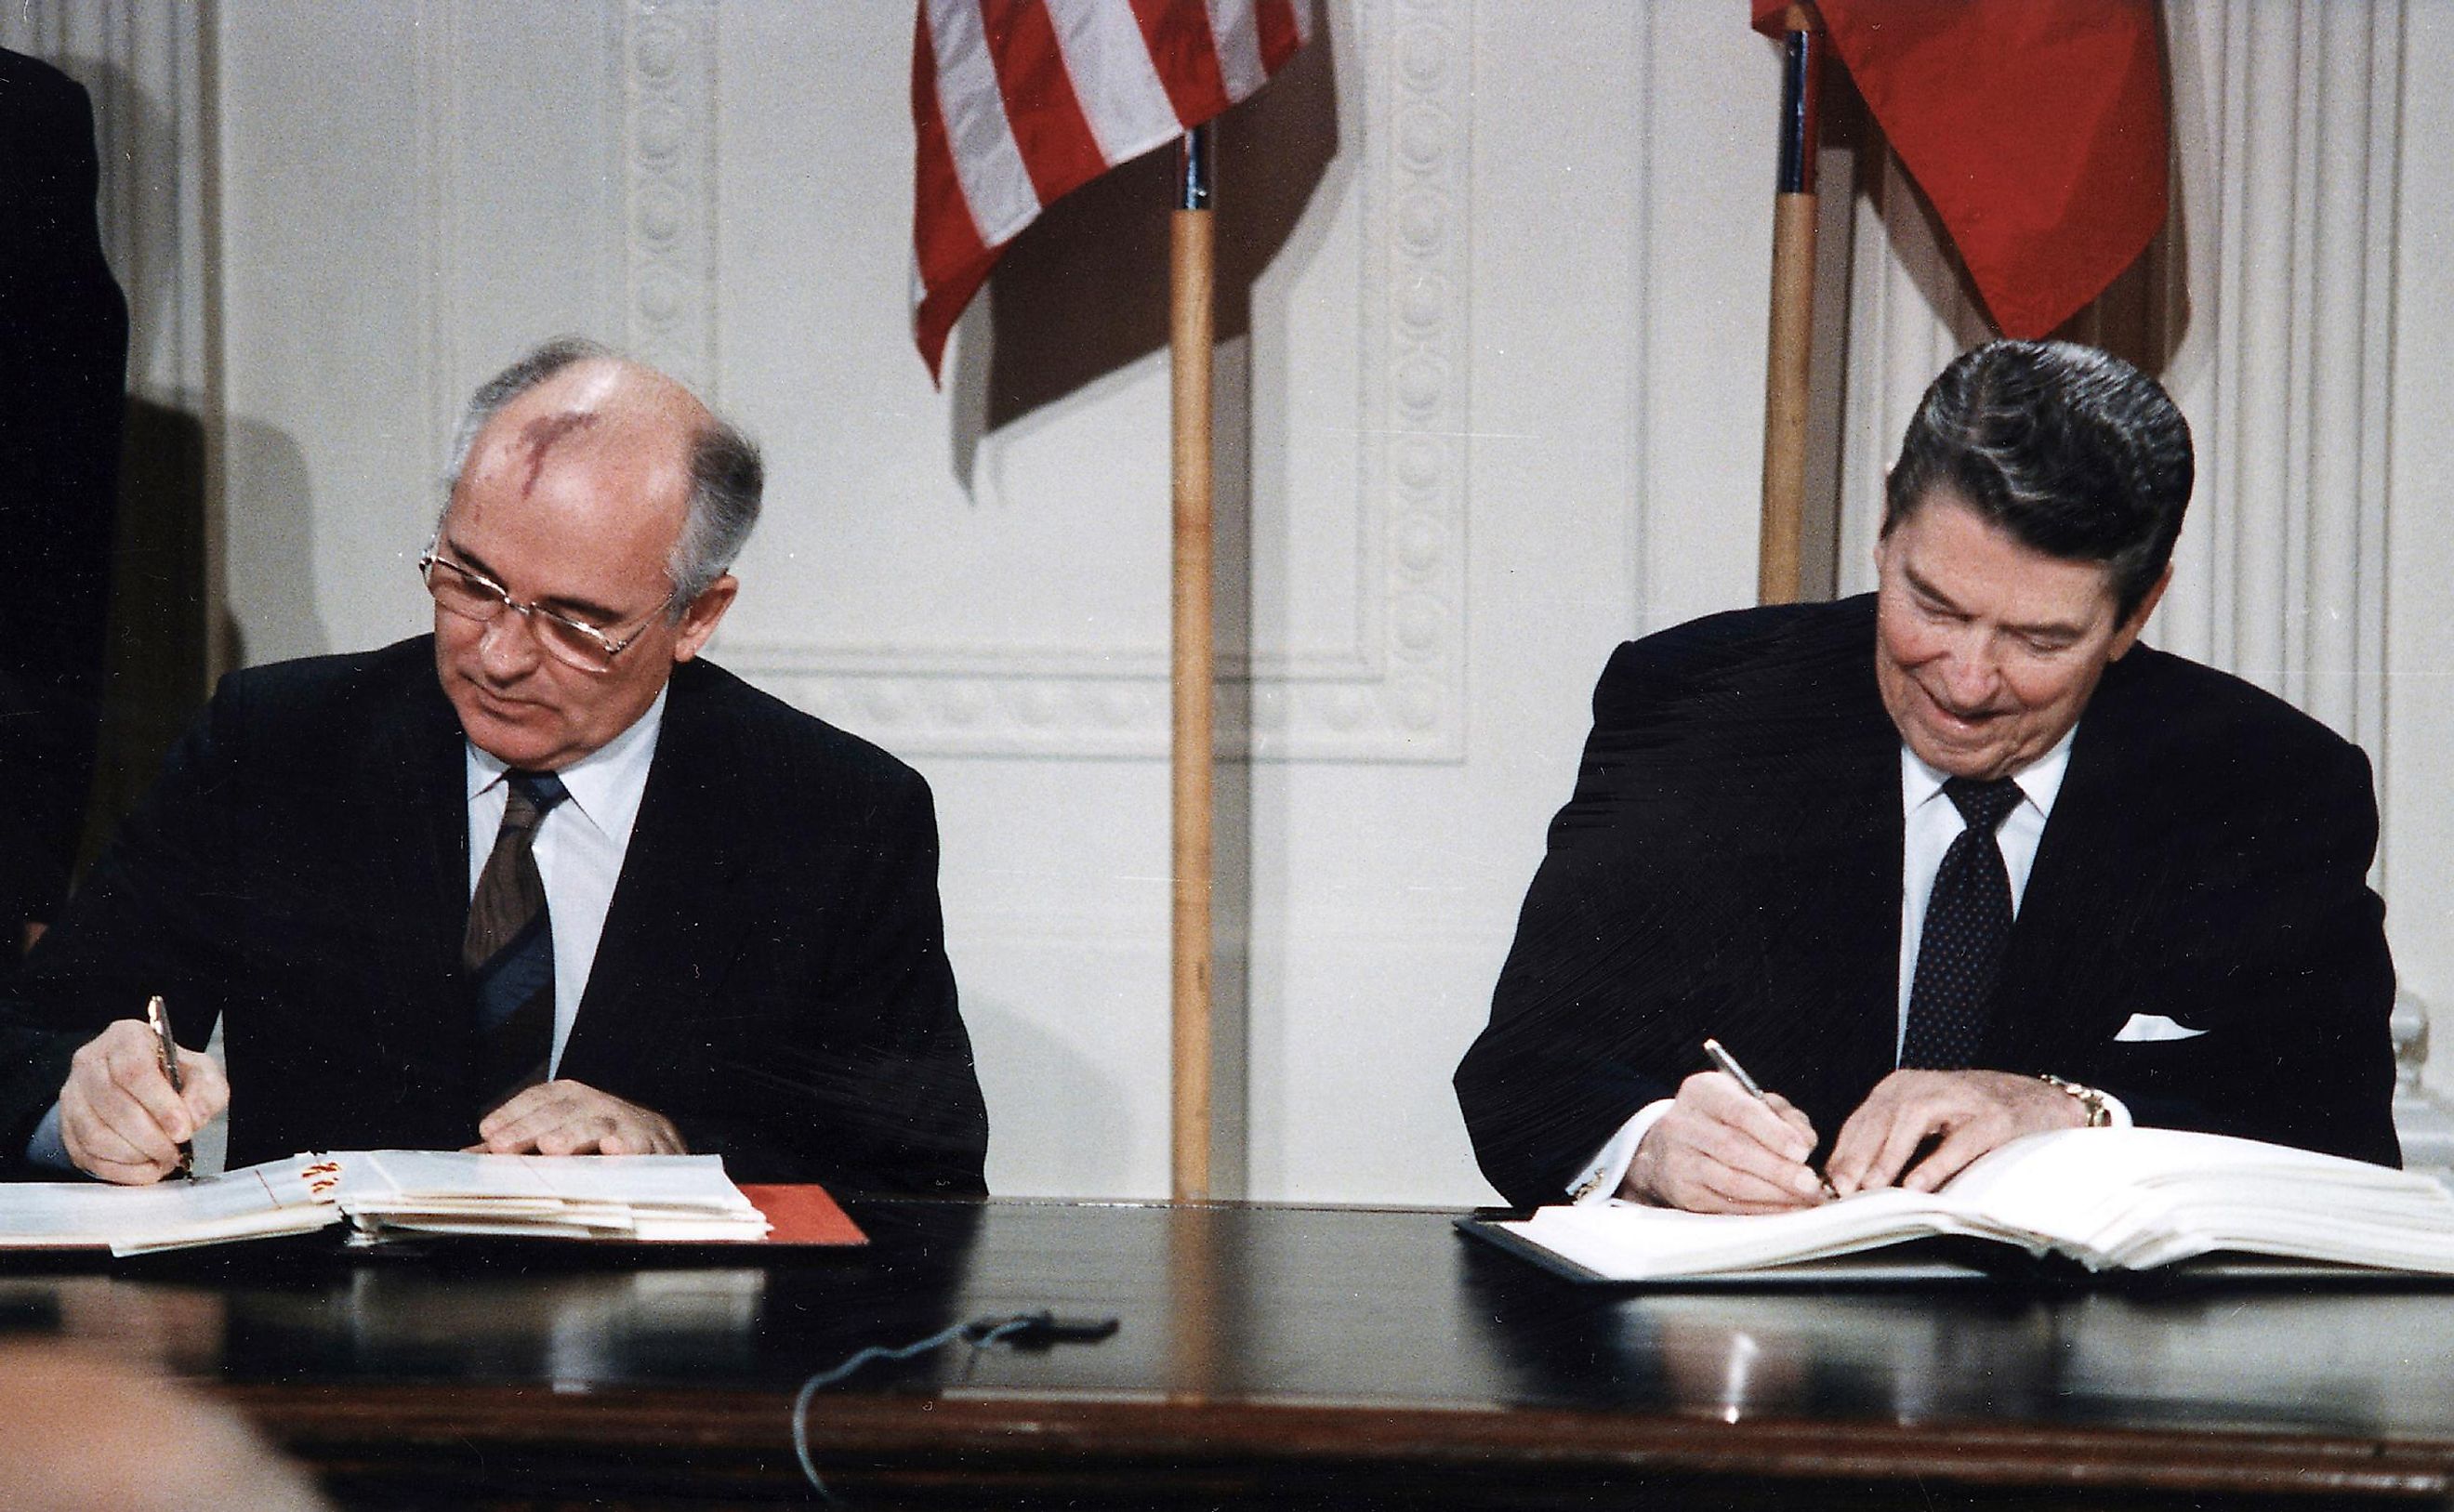 Soviet General Secretary Gorbachev and U.S. President Reagan signing the INF Treaty, 1987.